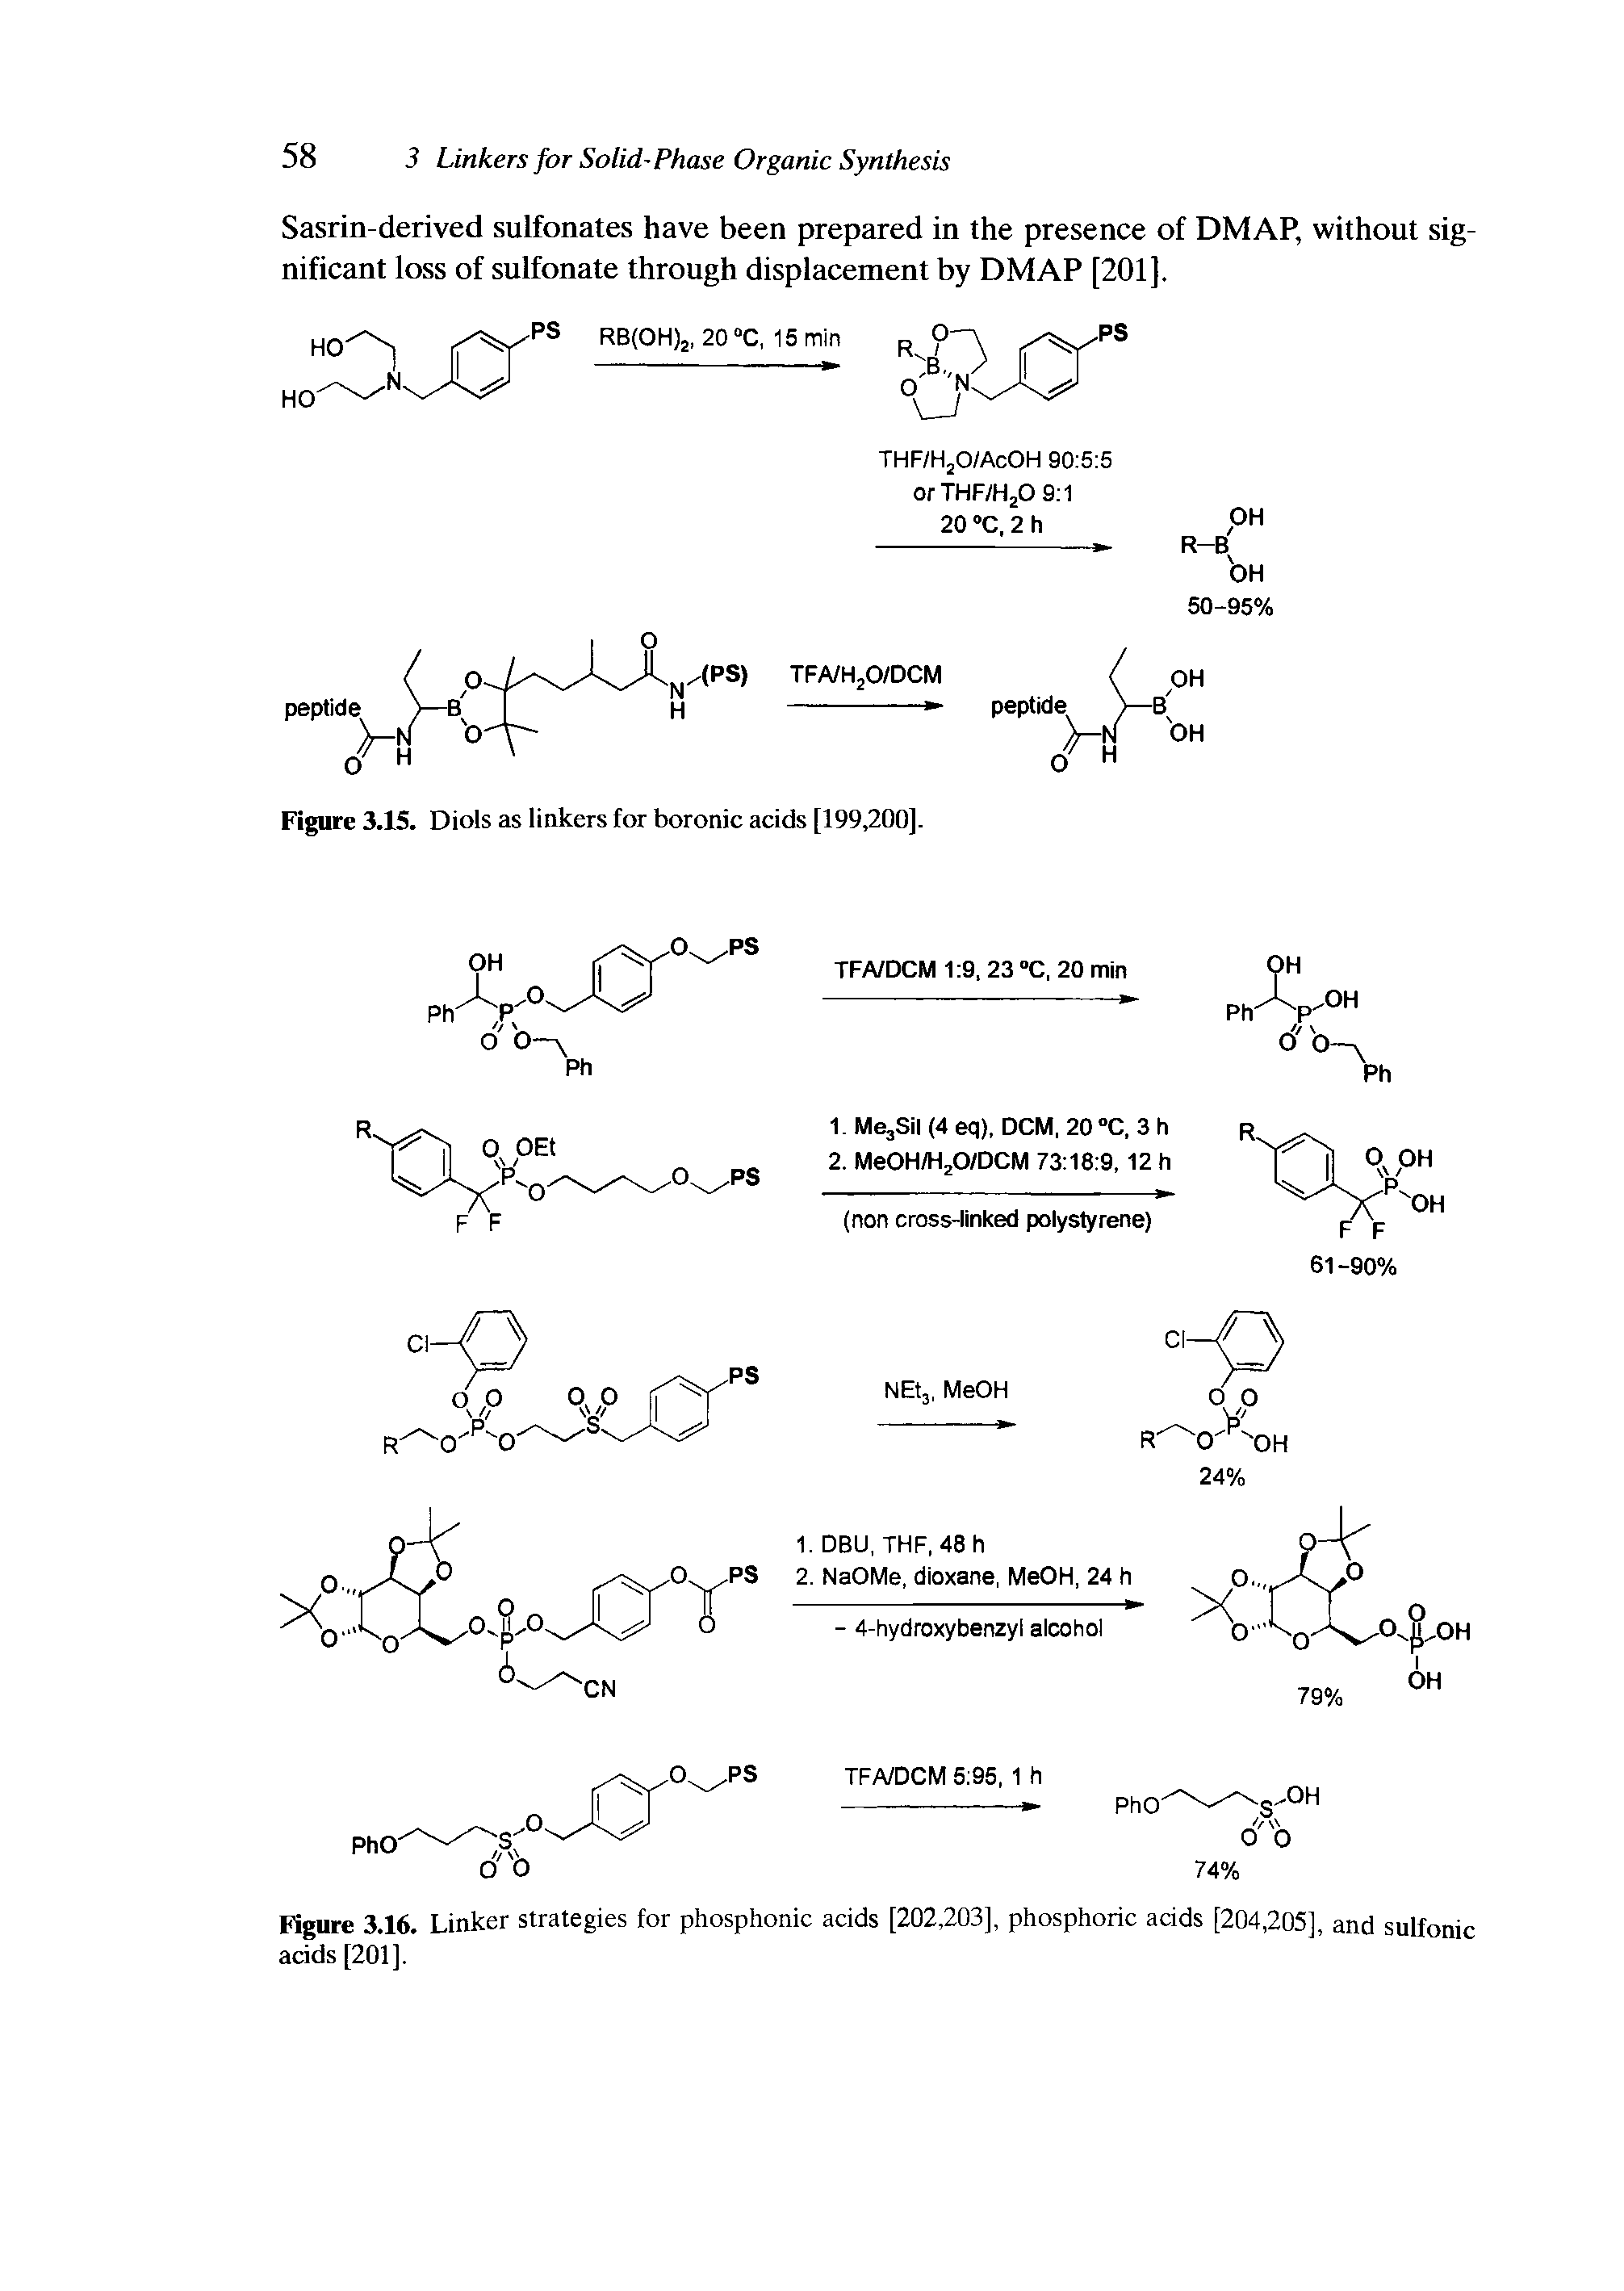 Figure 3.16. Linker strategies for phosphonic acids [202,203], phosphoric acids [204,205], and sulfonic acids [201].